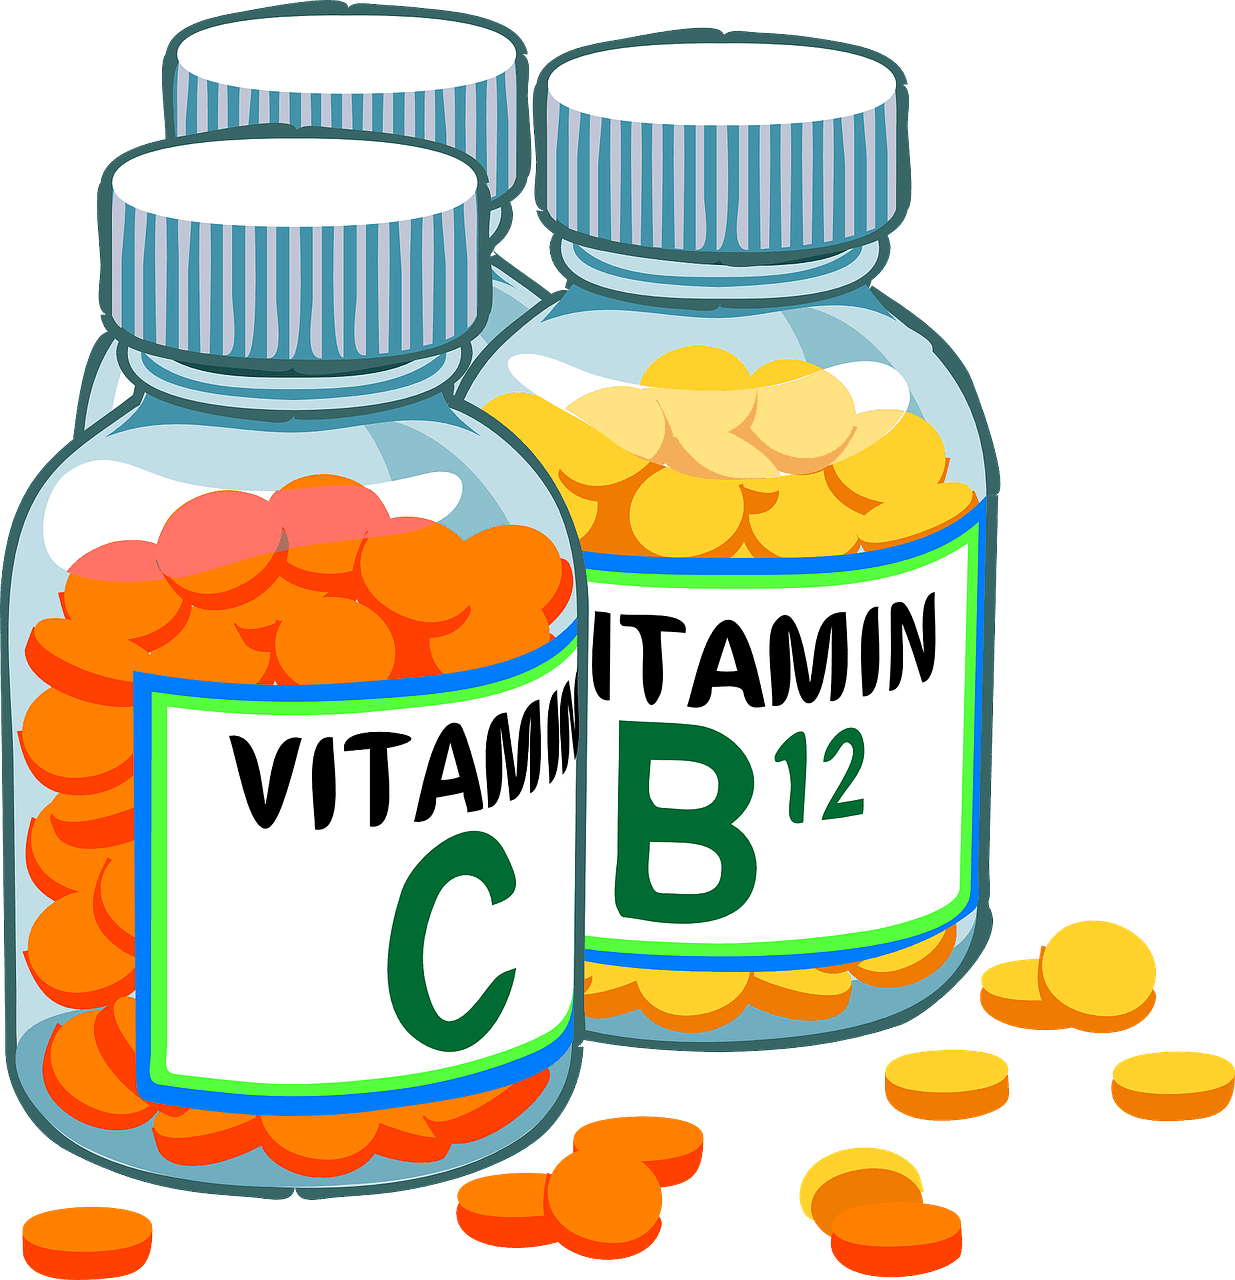 Health & Wellness: Vitamin Metabolism